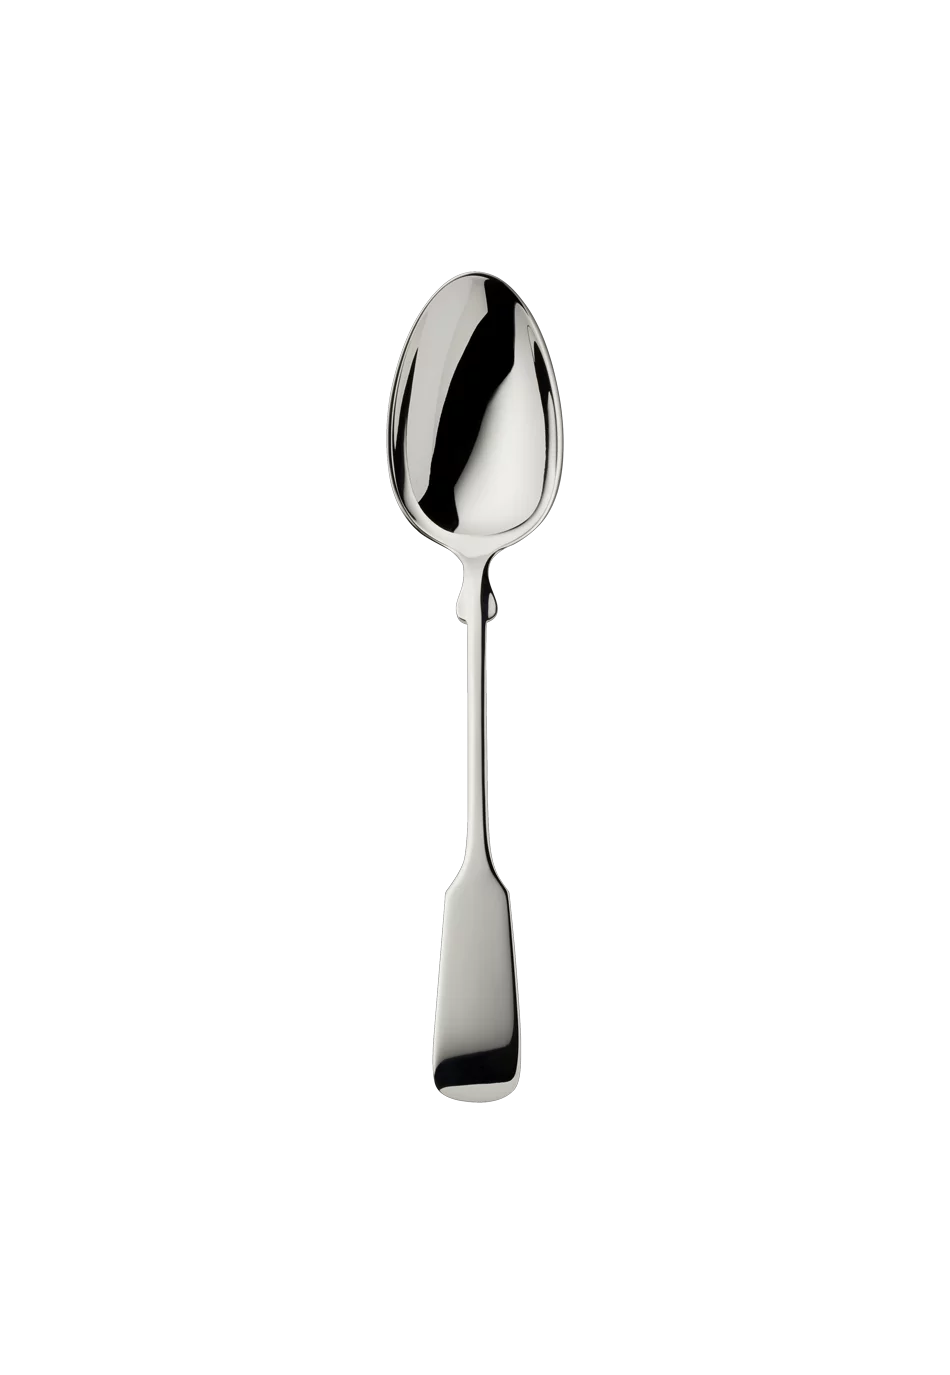 Spaten Children's Spoon (925 Sterling Silver)